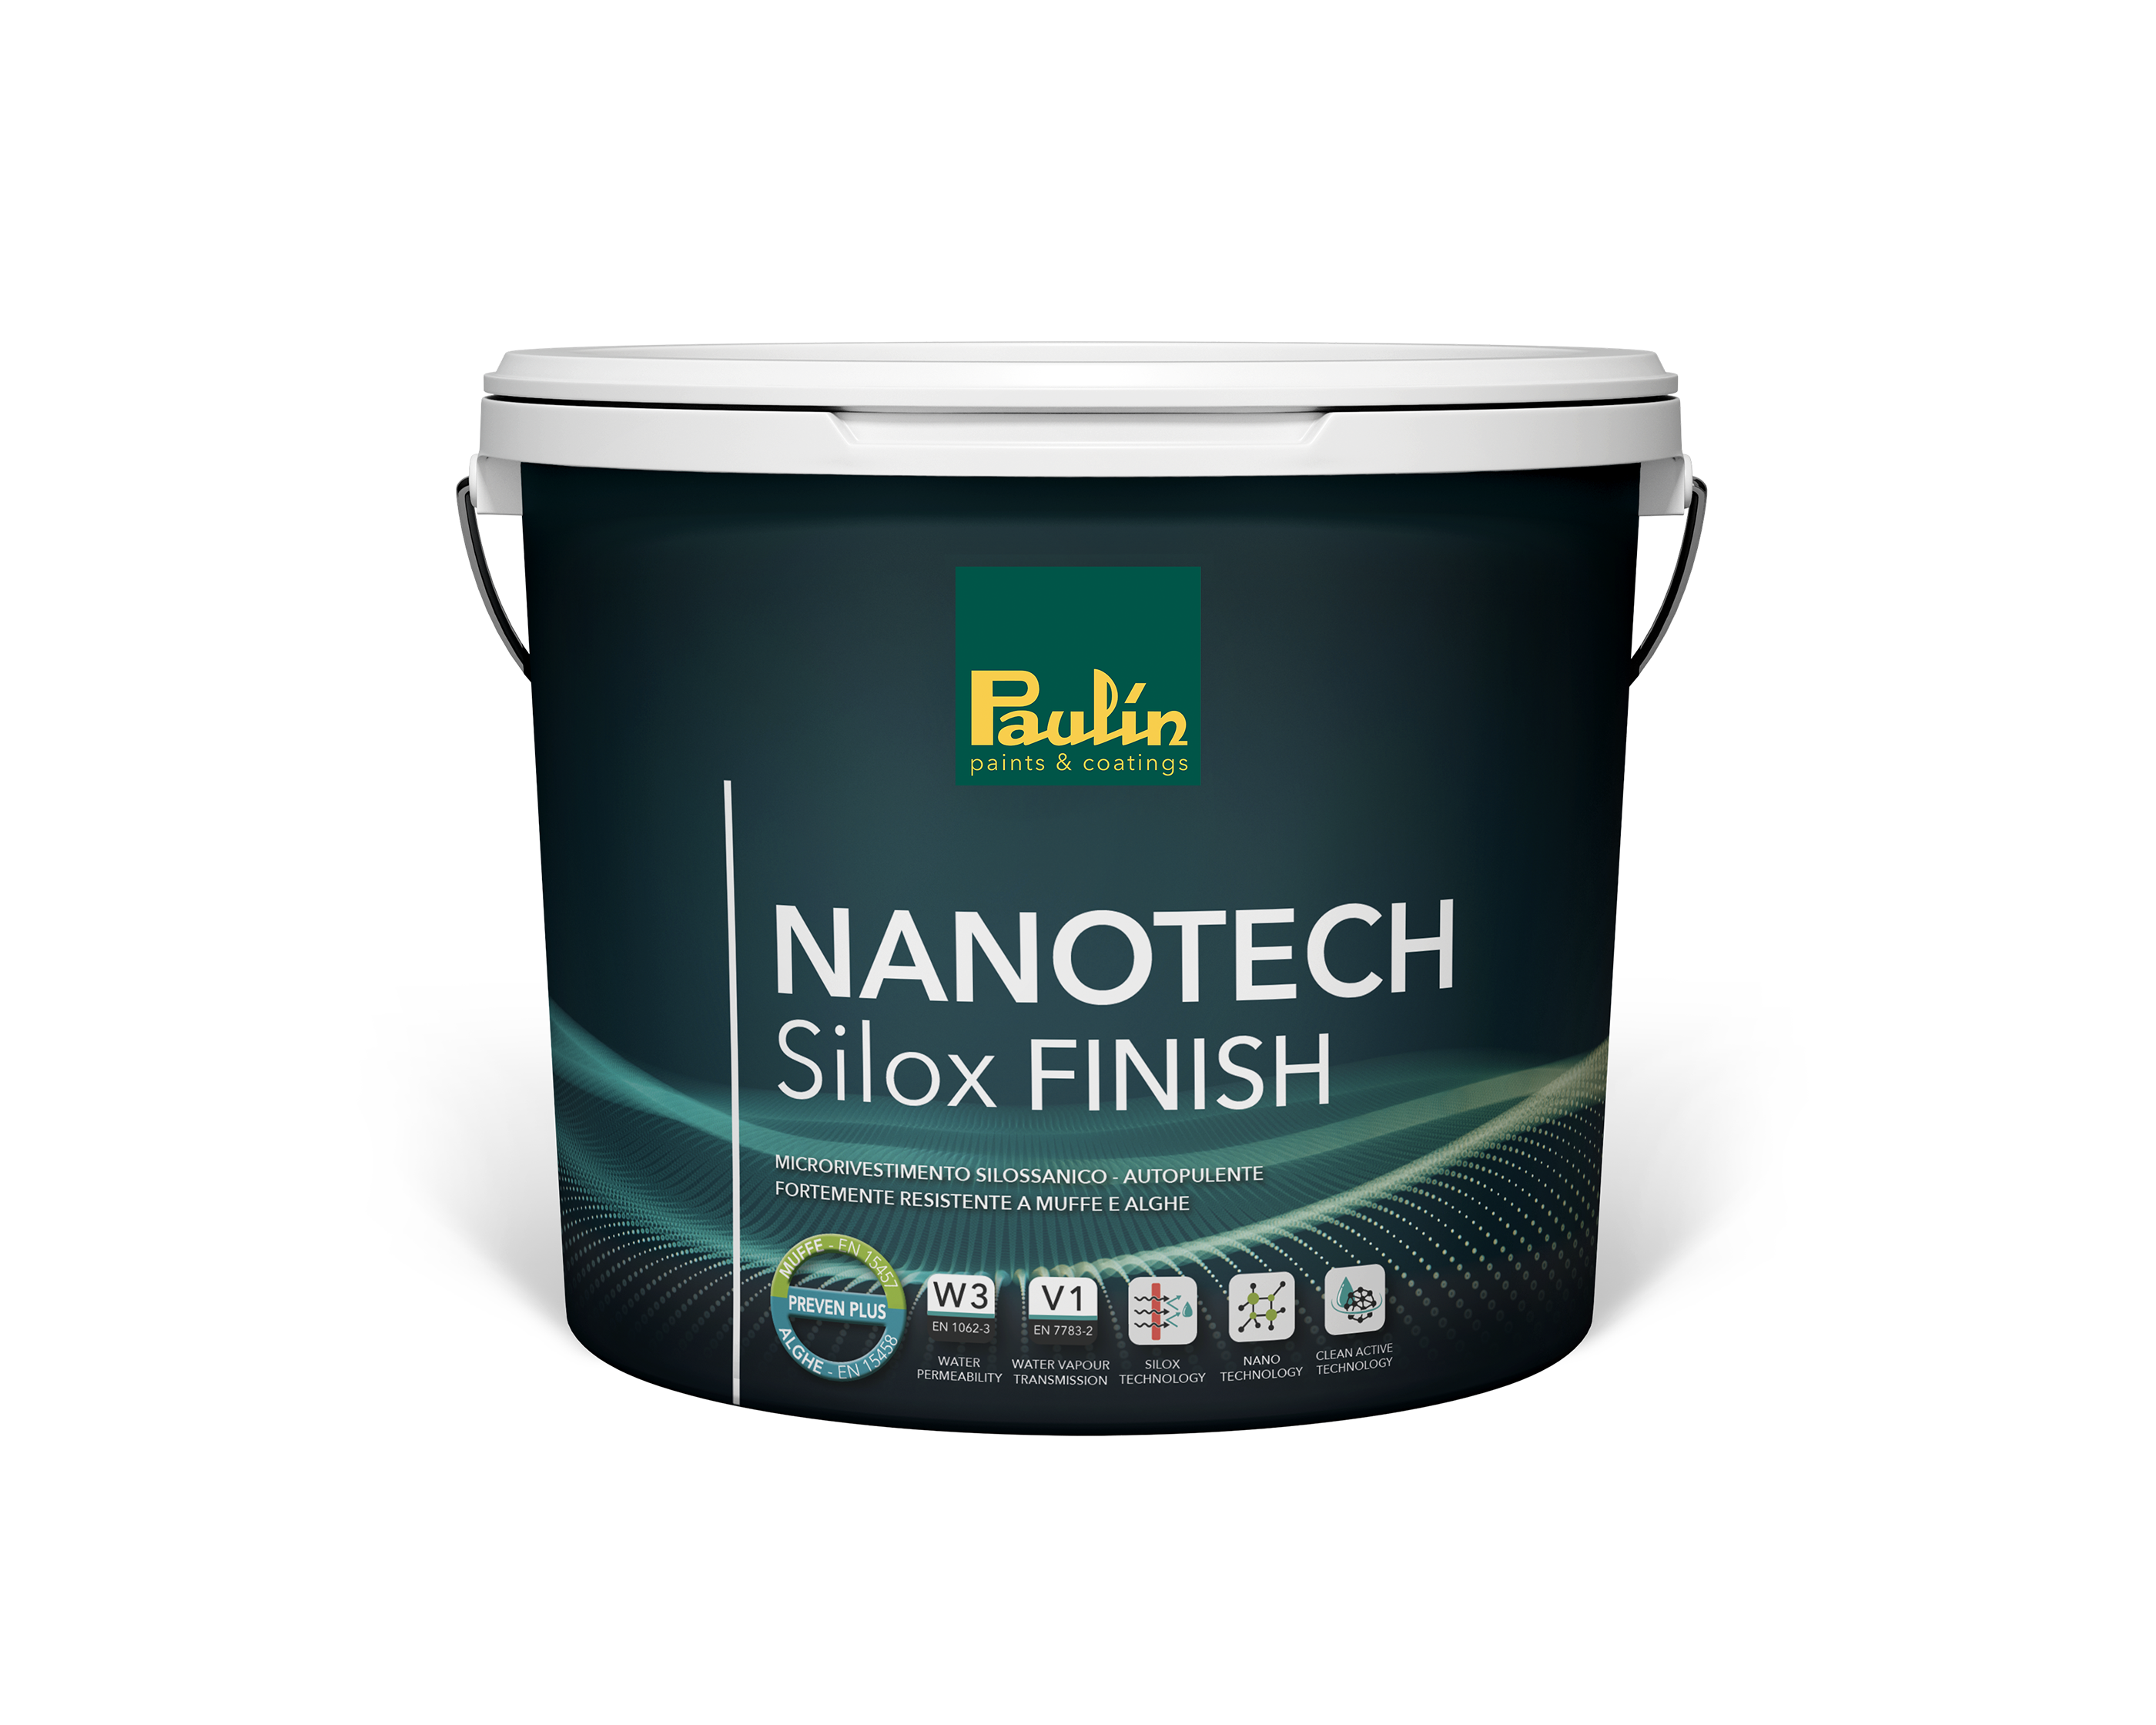 Nanotech-Silox_FINISH_Low.png